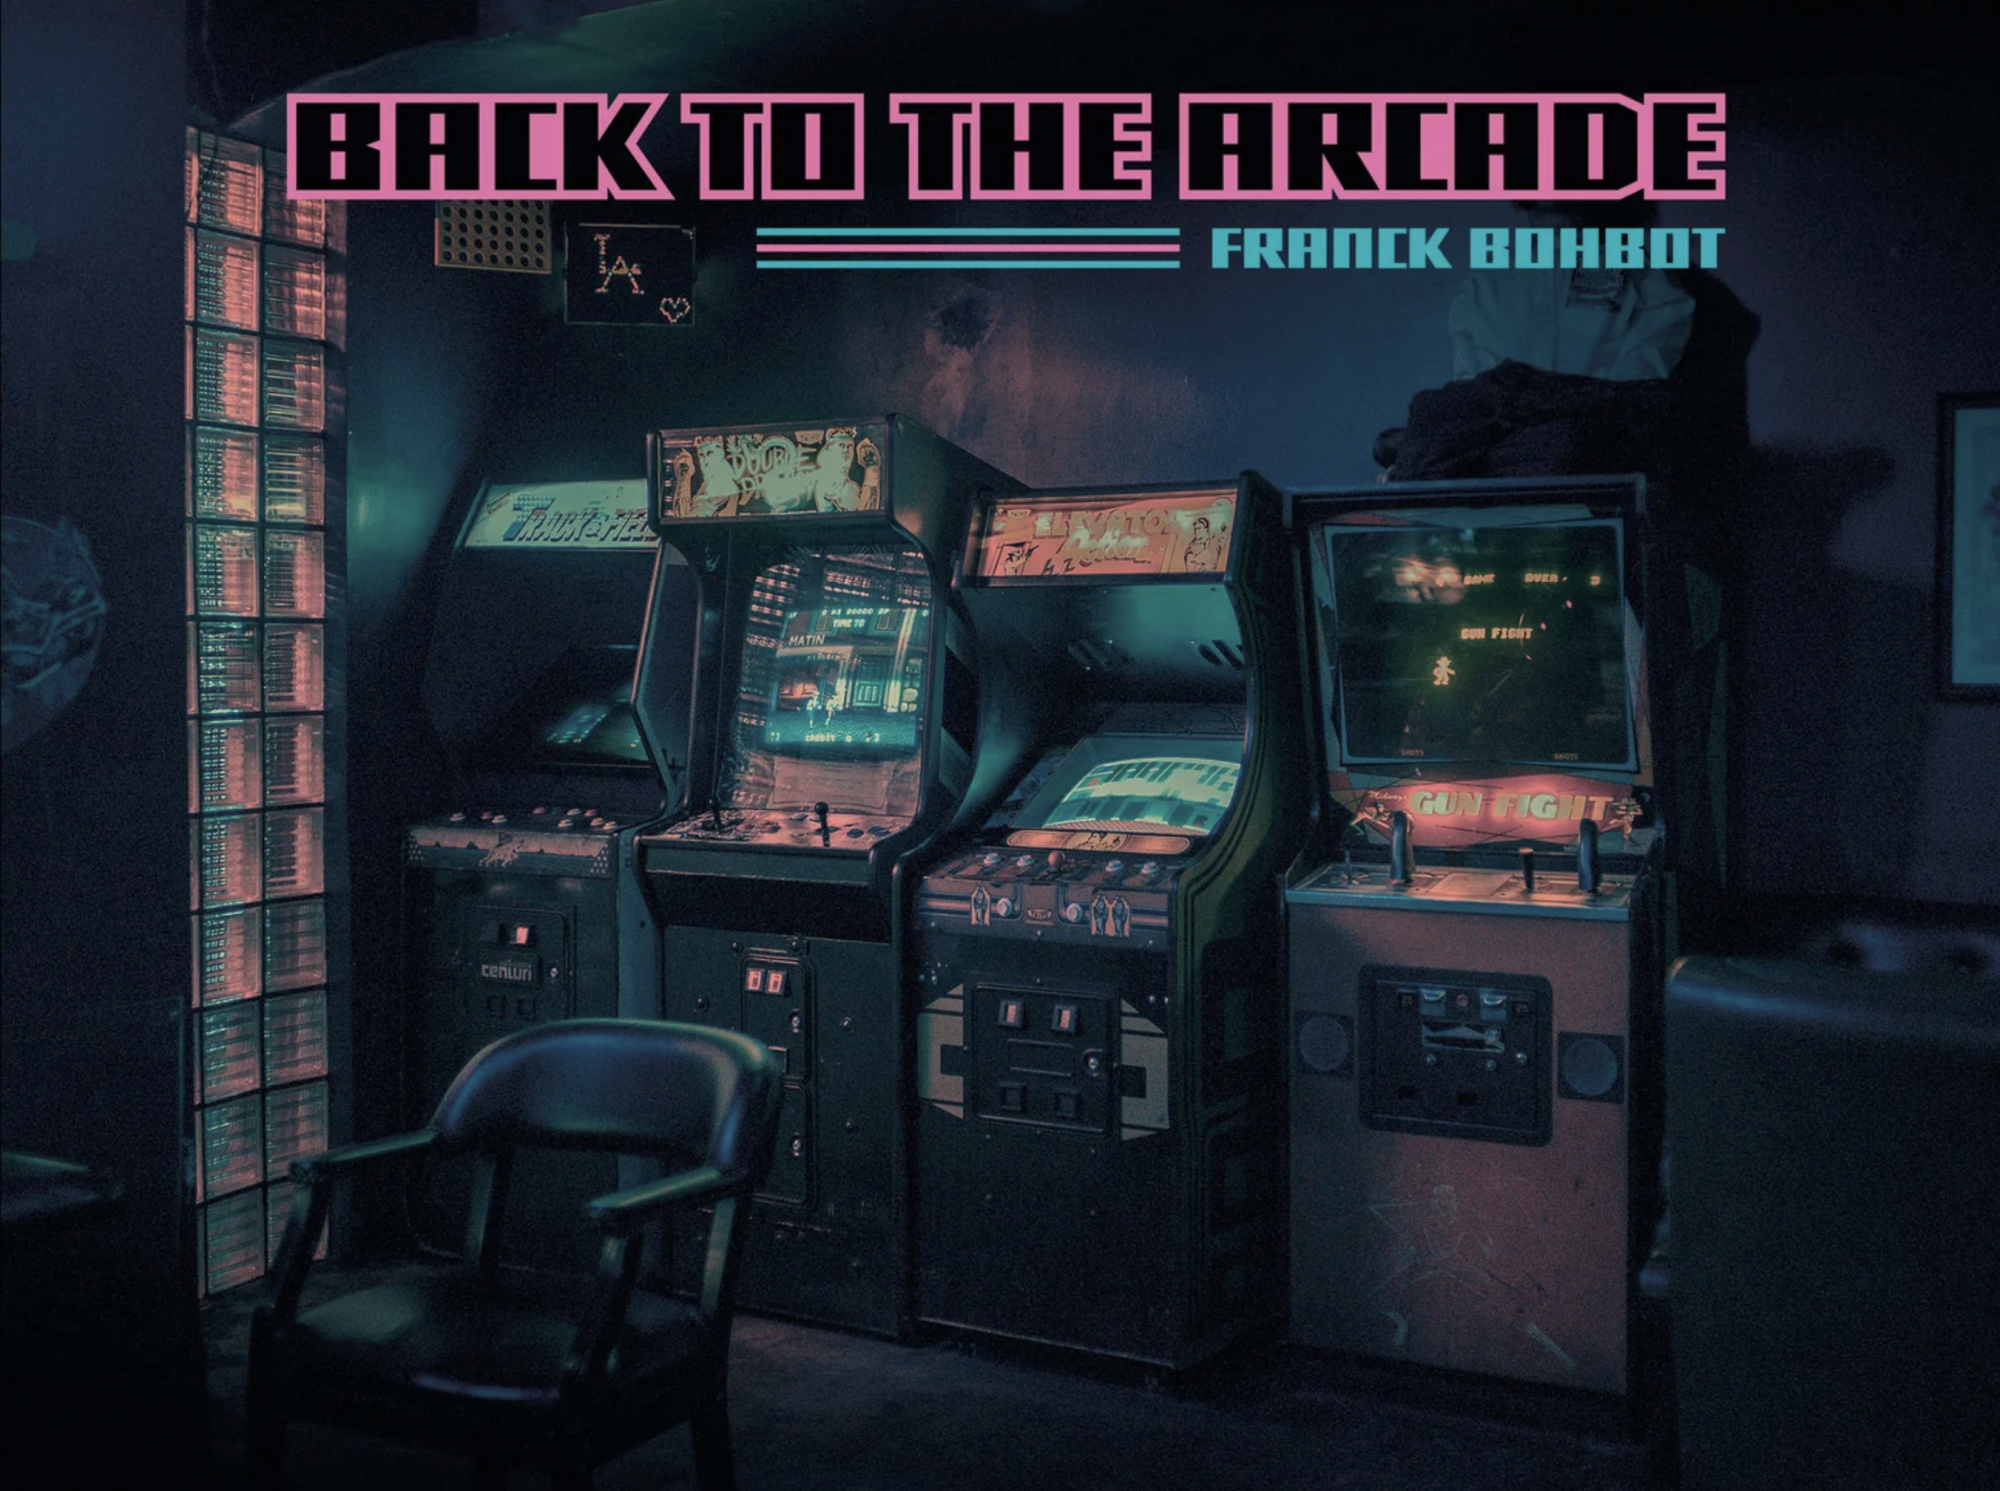 Back to the Arcade, Franck Bohbot